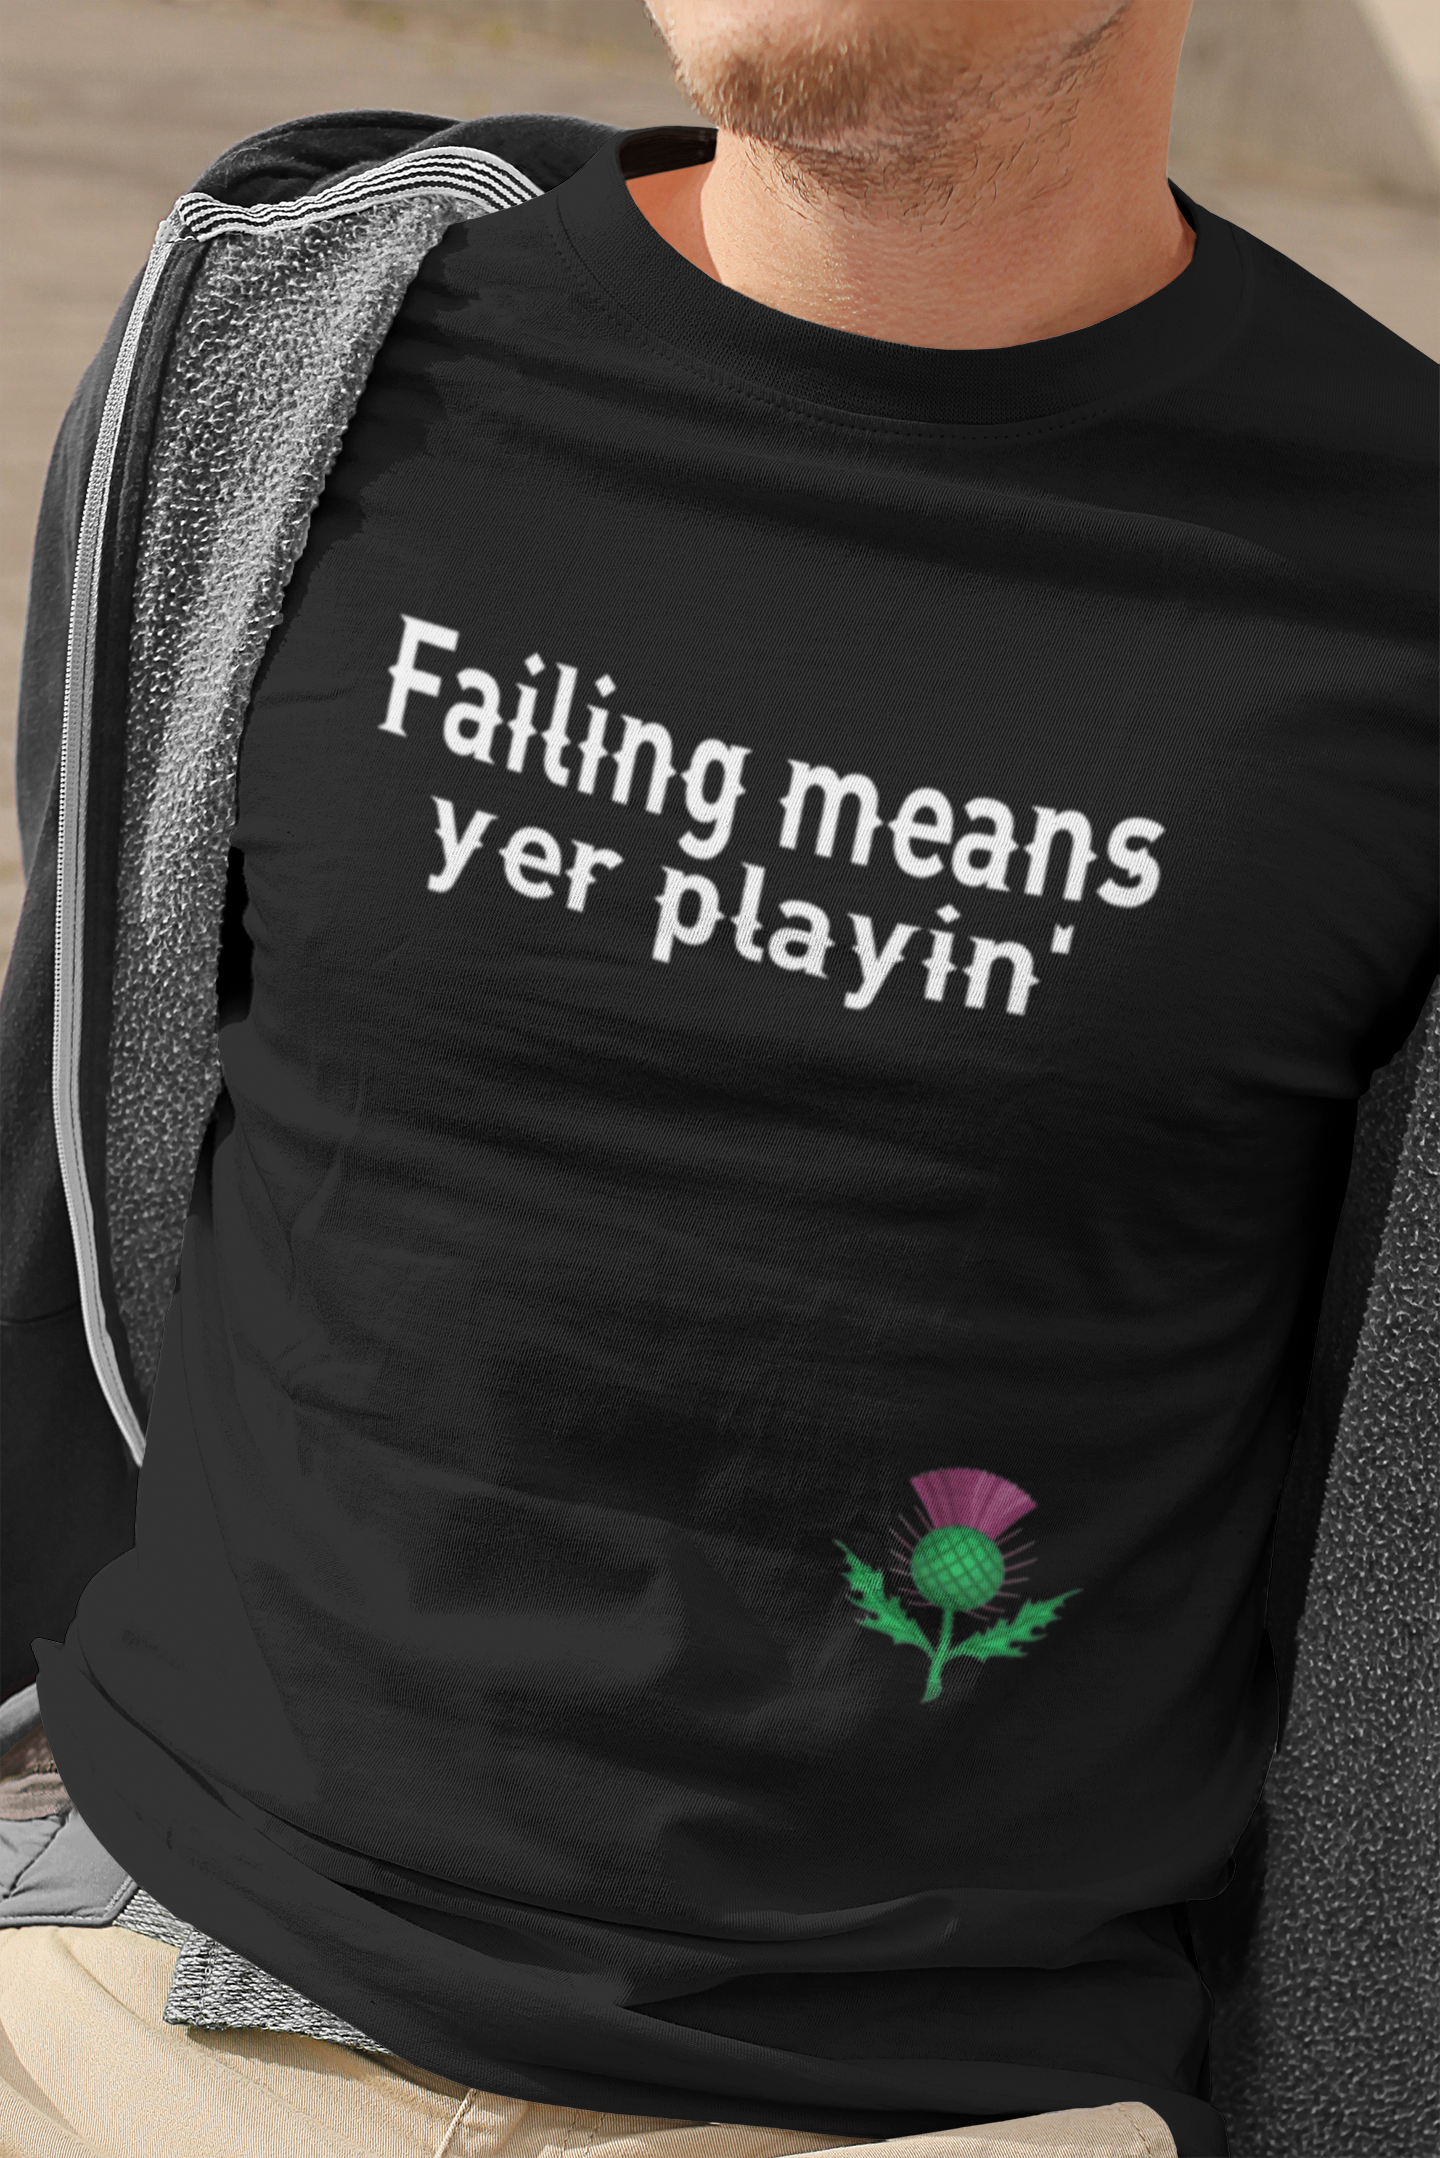 Failing means yer playin' TShirt - Unisex - Scotland